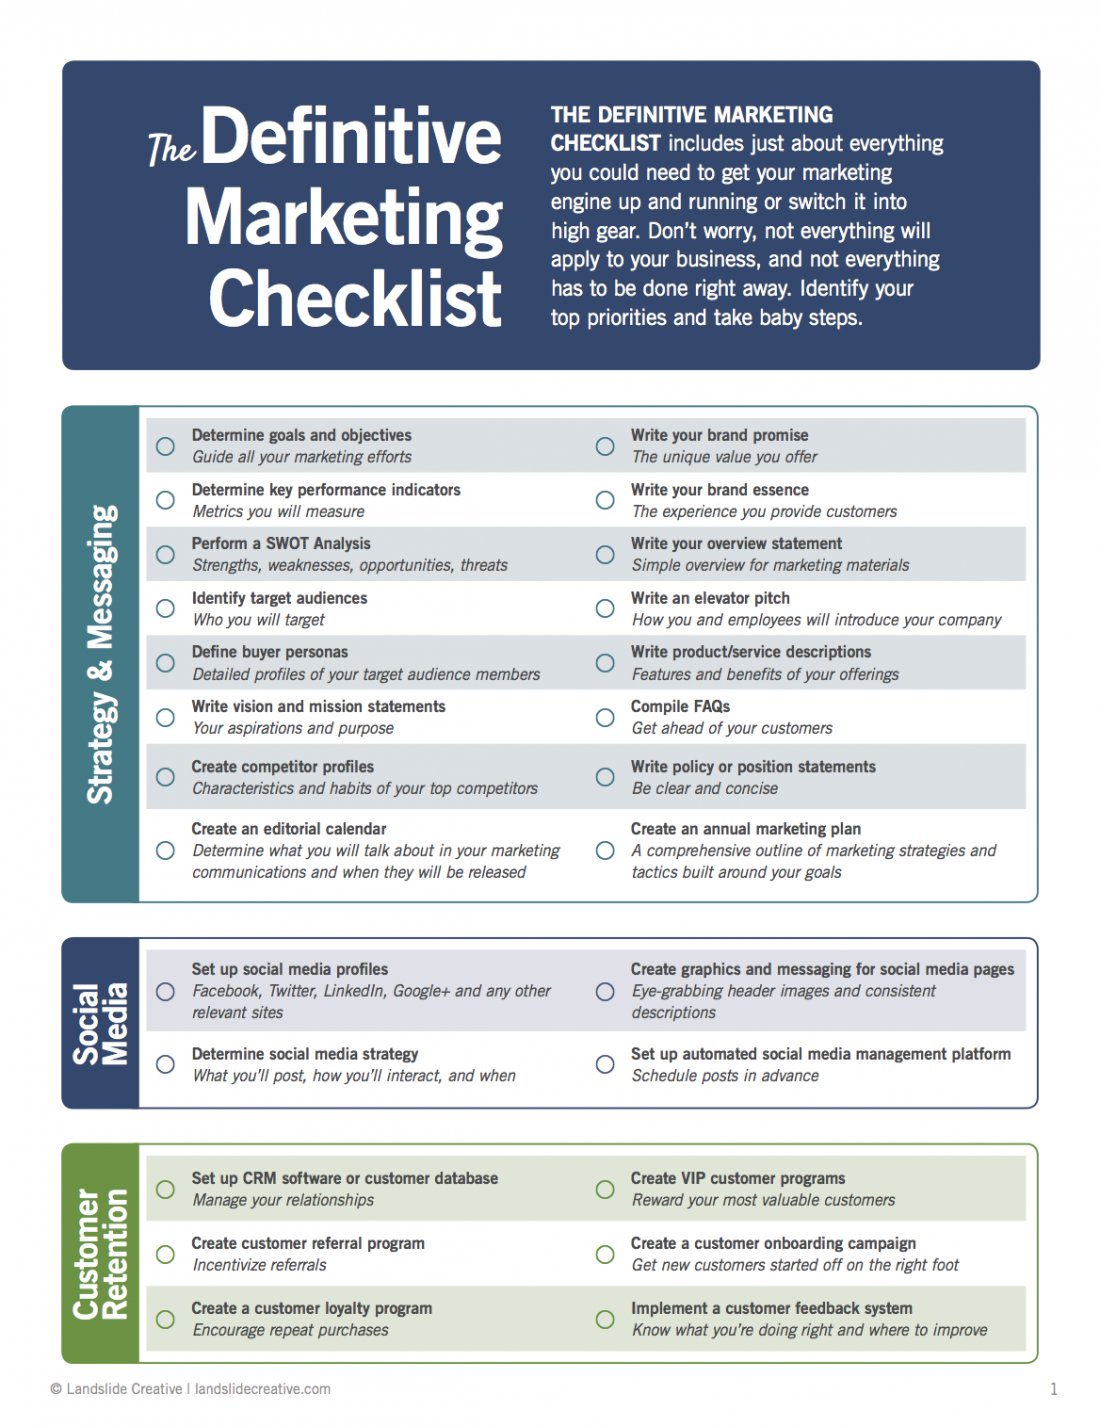 The Definitive Marketing Checklist Landslide Creative